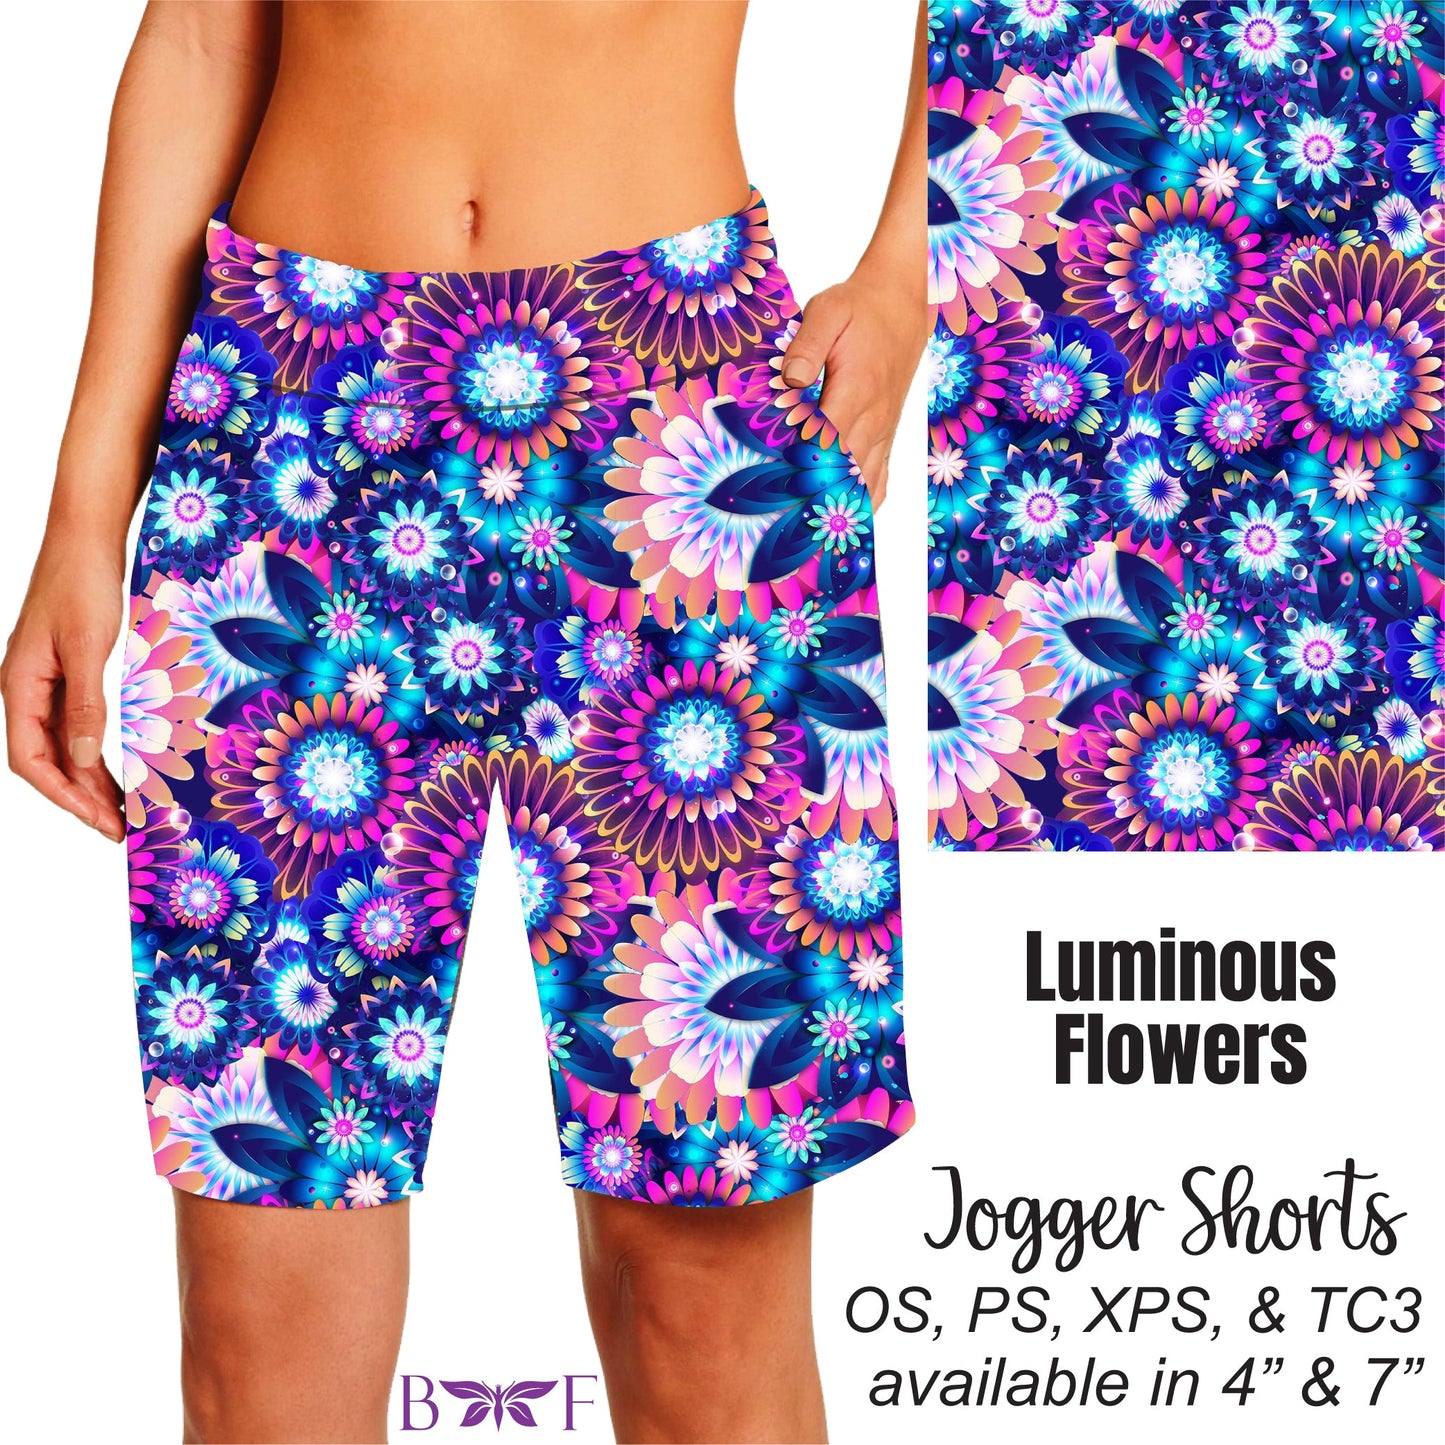 Luminous Flower biker shorts with pockets